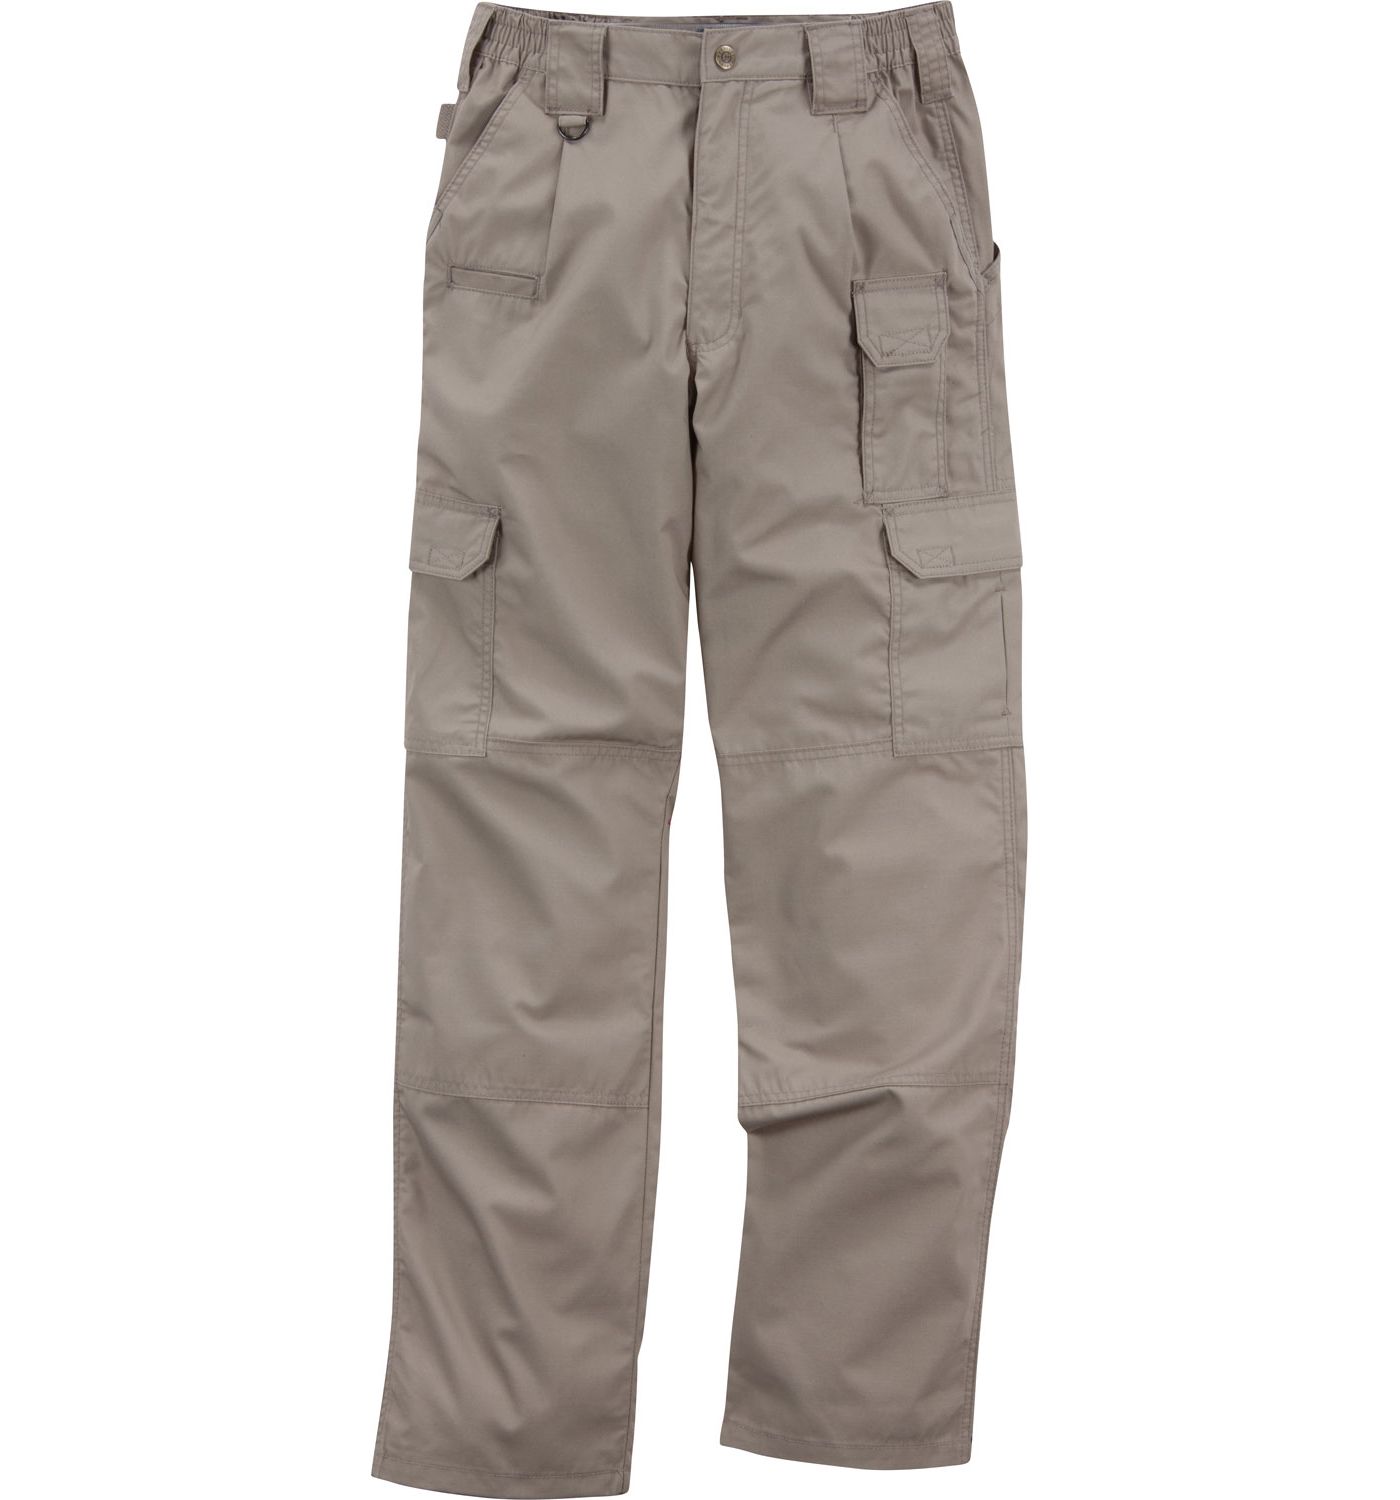 5.11 Tactical Men's Taclite Pro Pants | DICK'S Sporting Goods